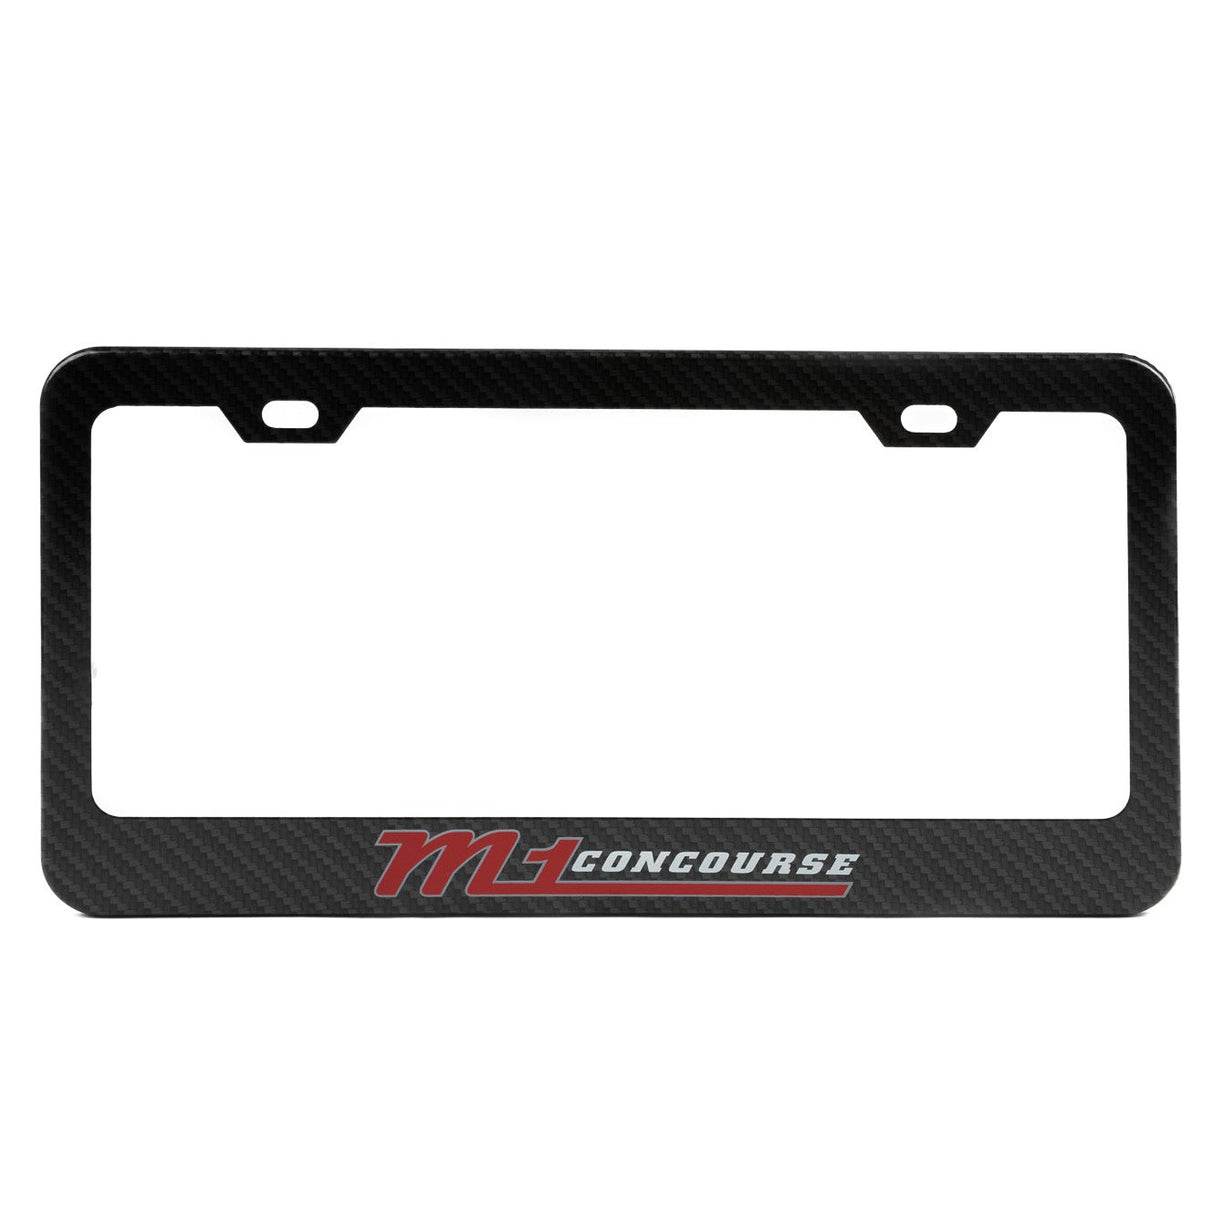 M1 Concourse License Plate Frame - Black